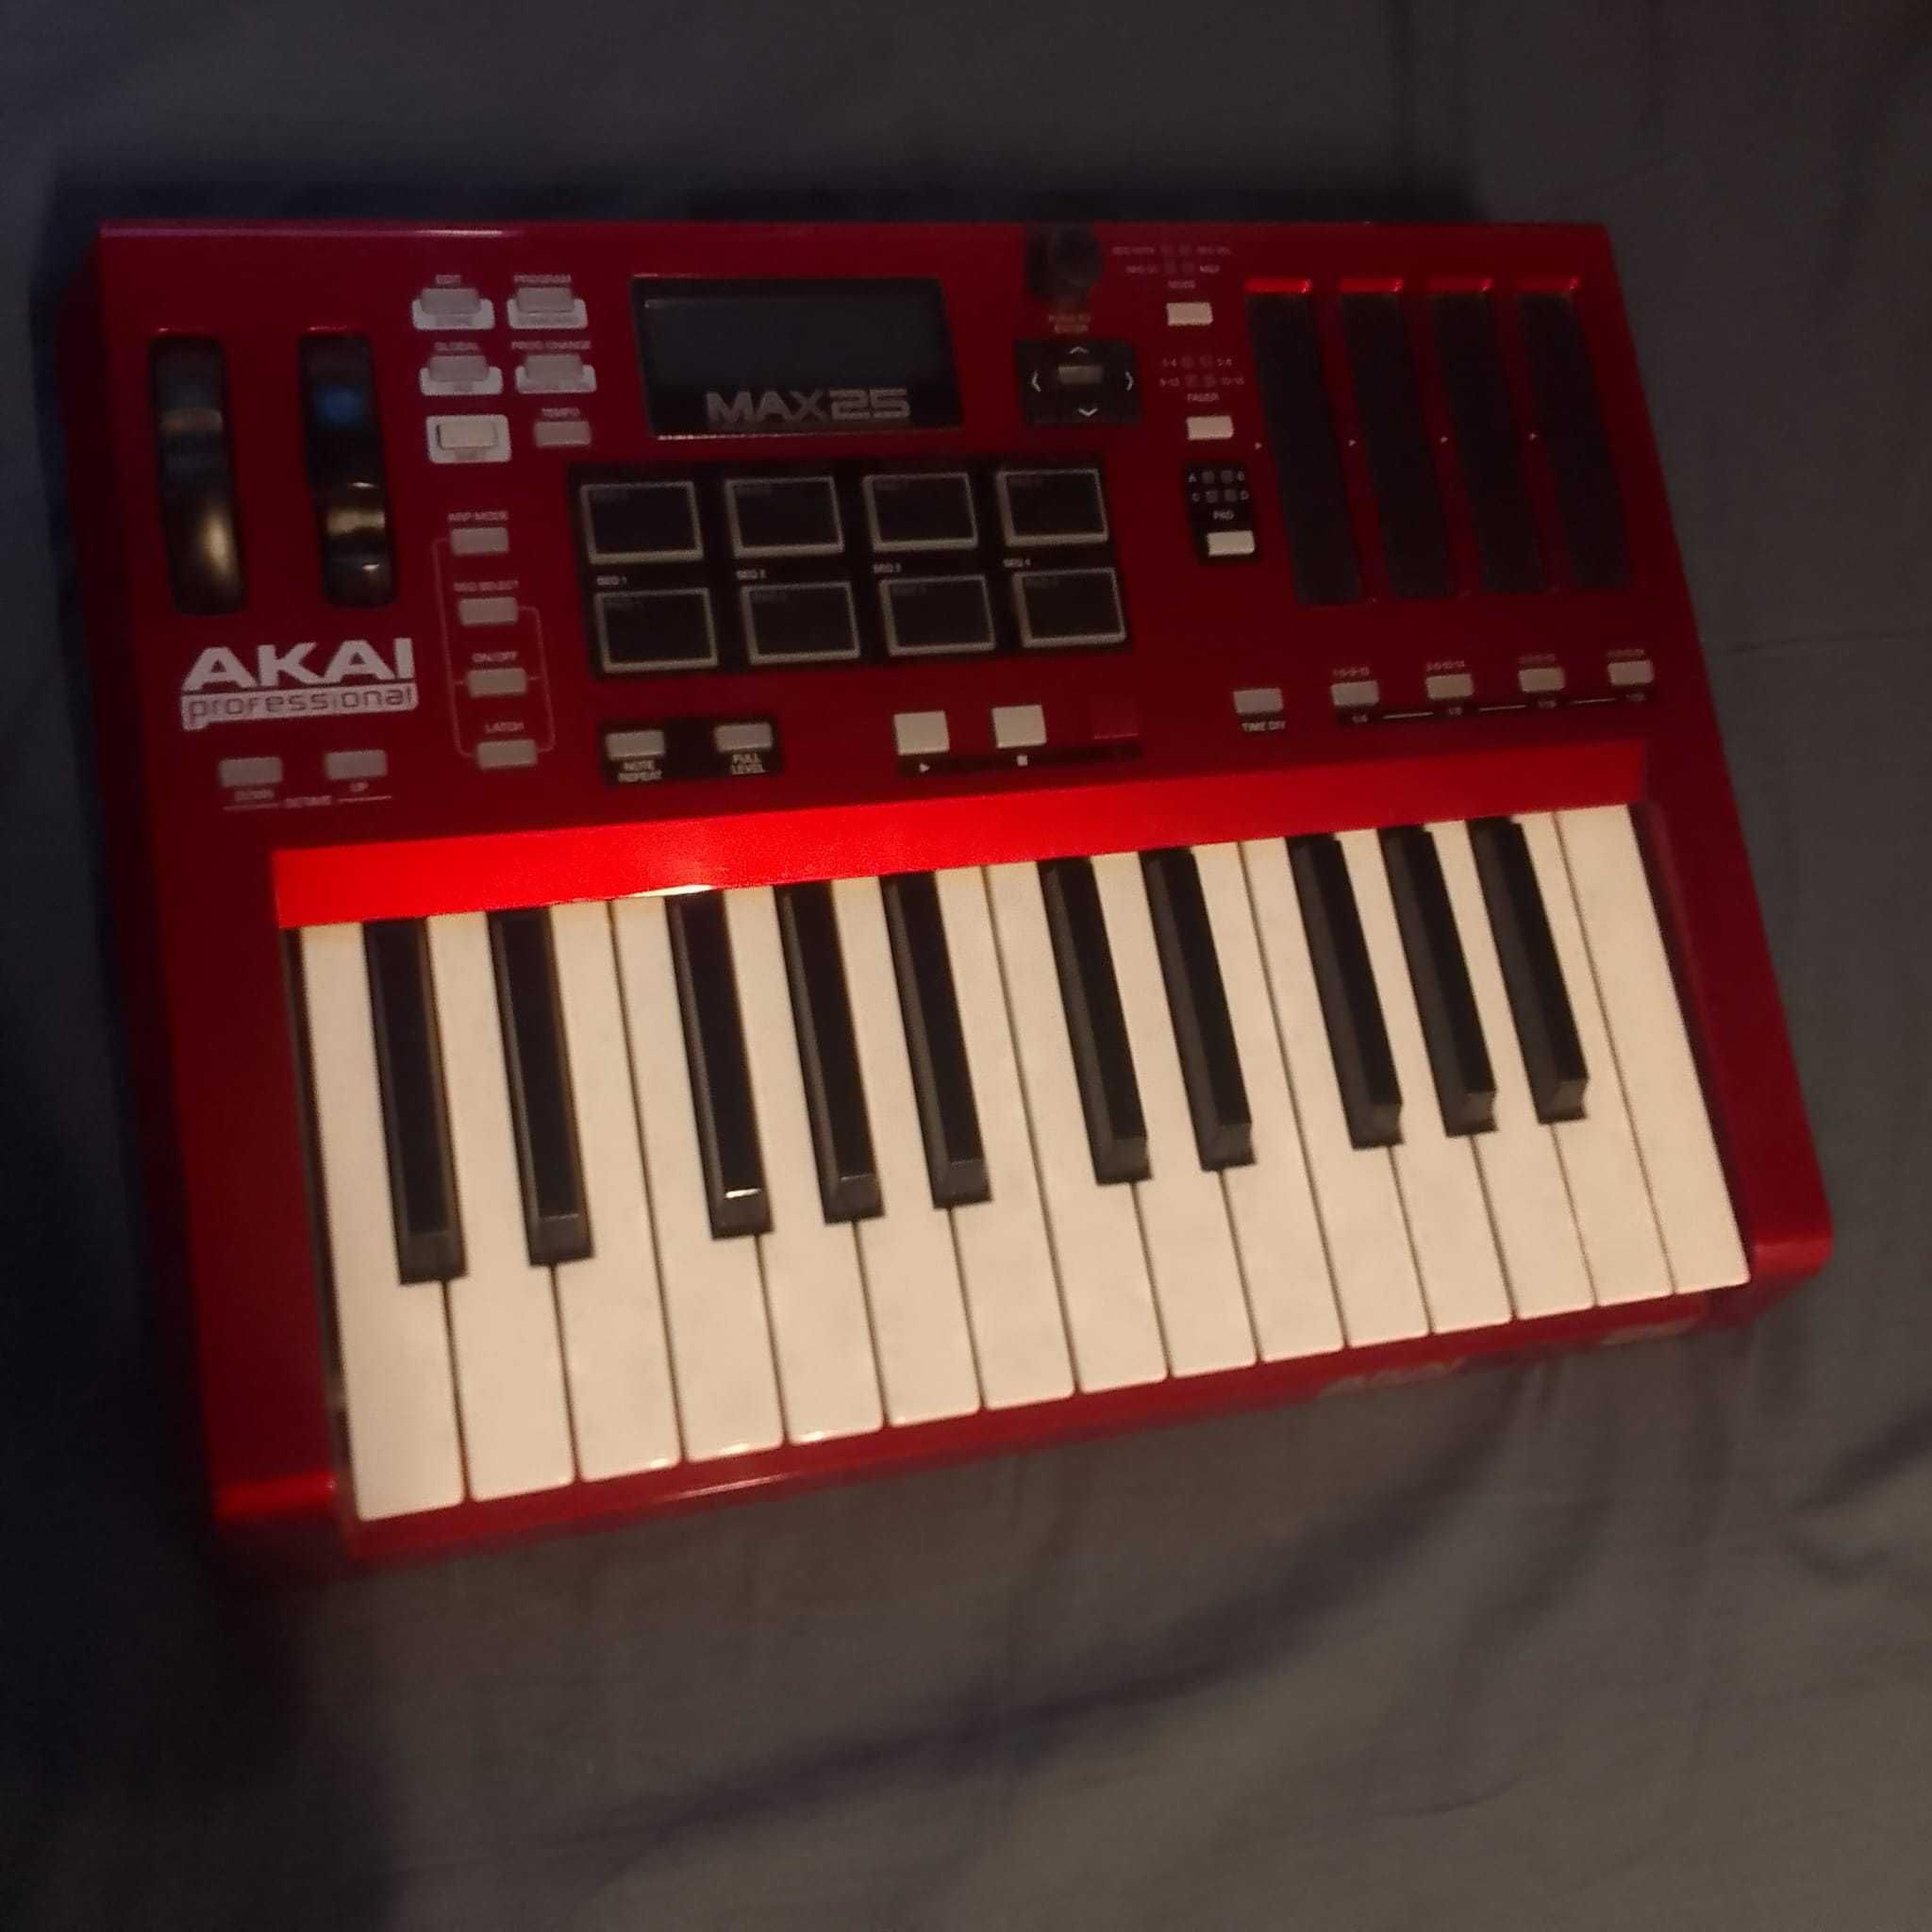 Instrument controller MIDI Akai MAX 25